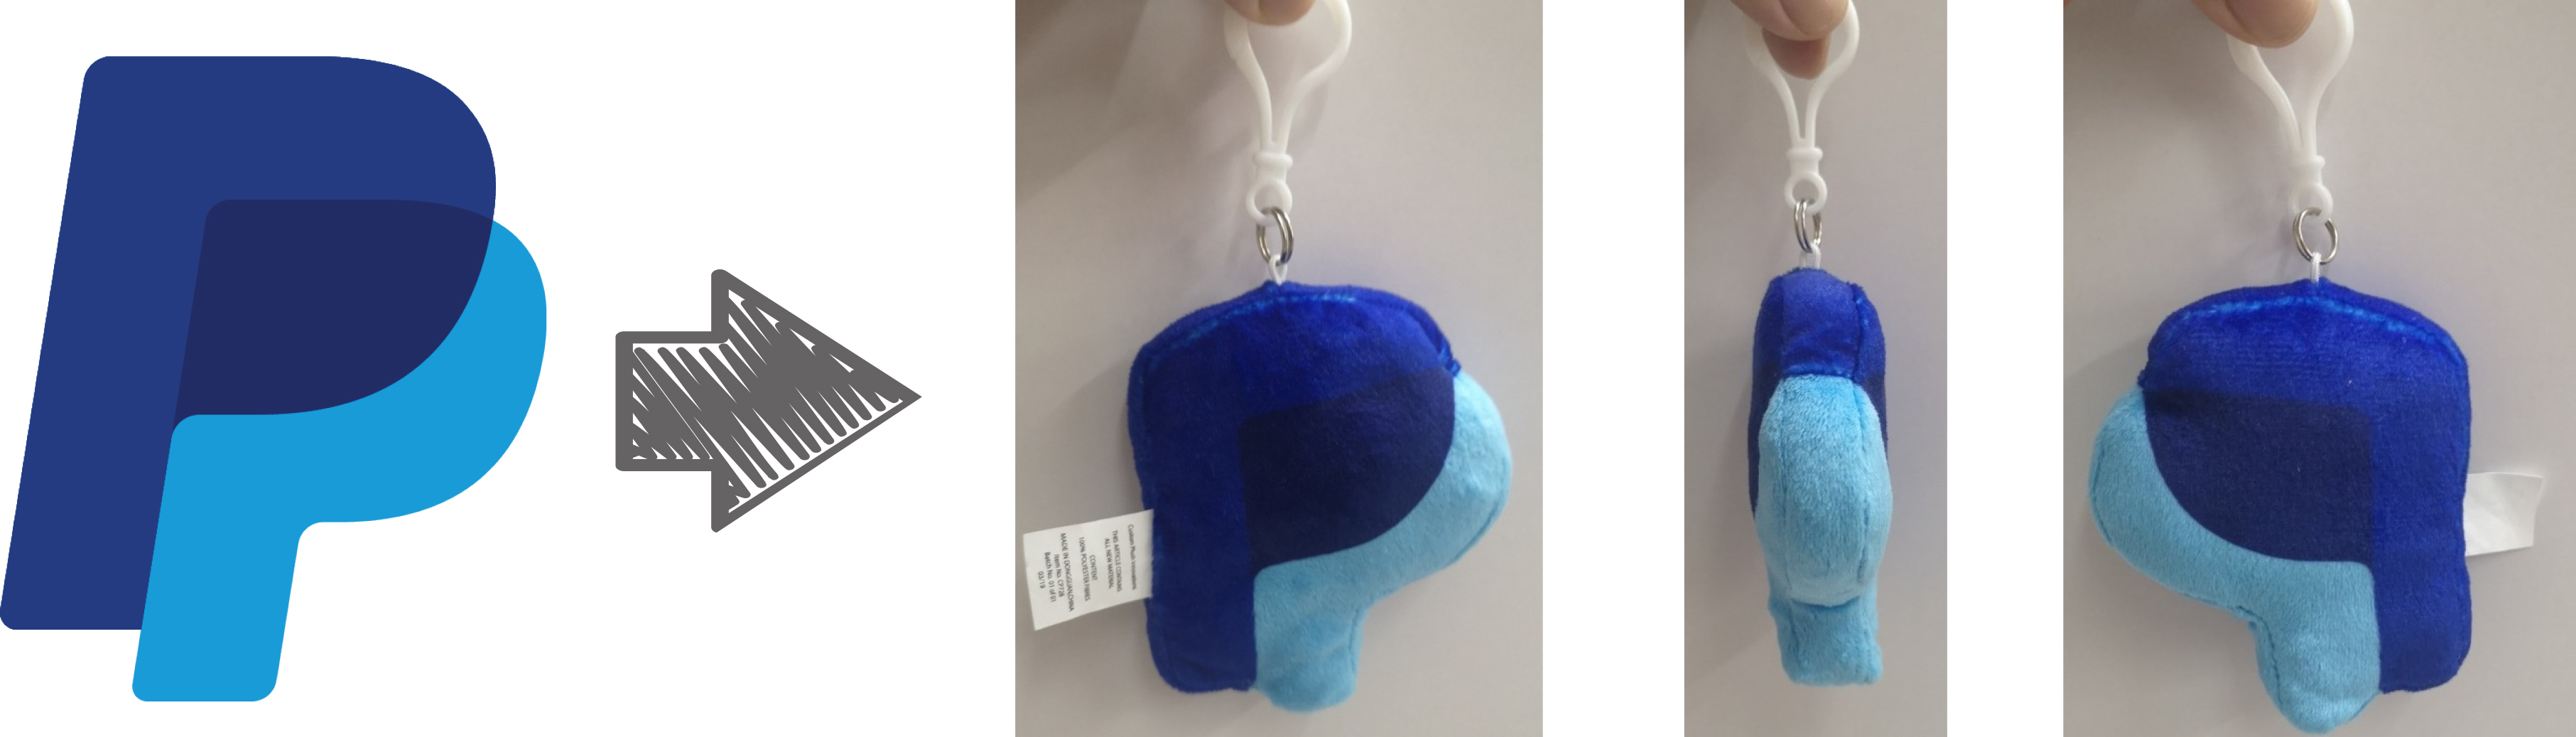 Paypal stuffed animal keychain